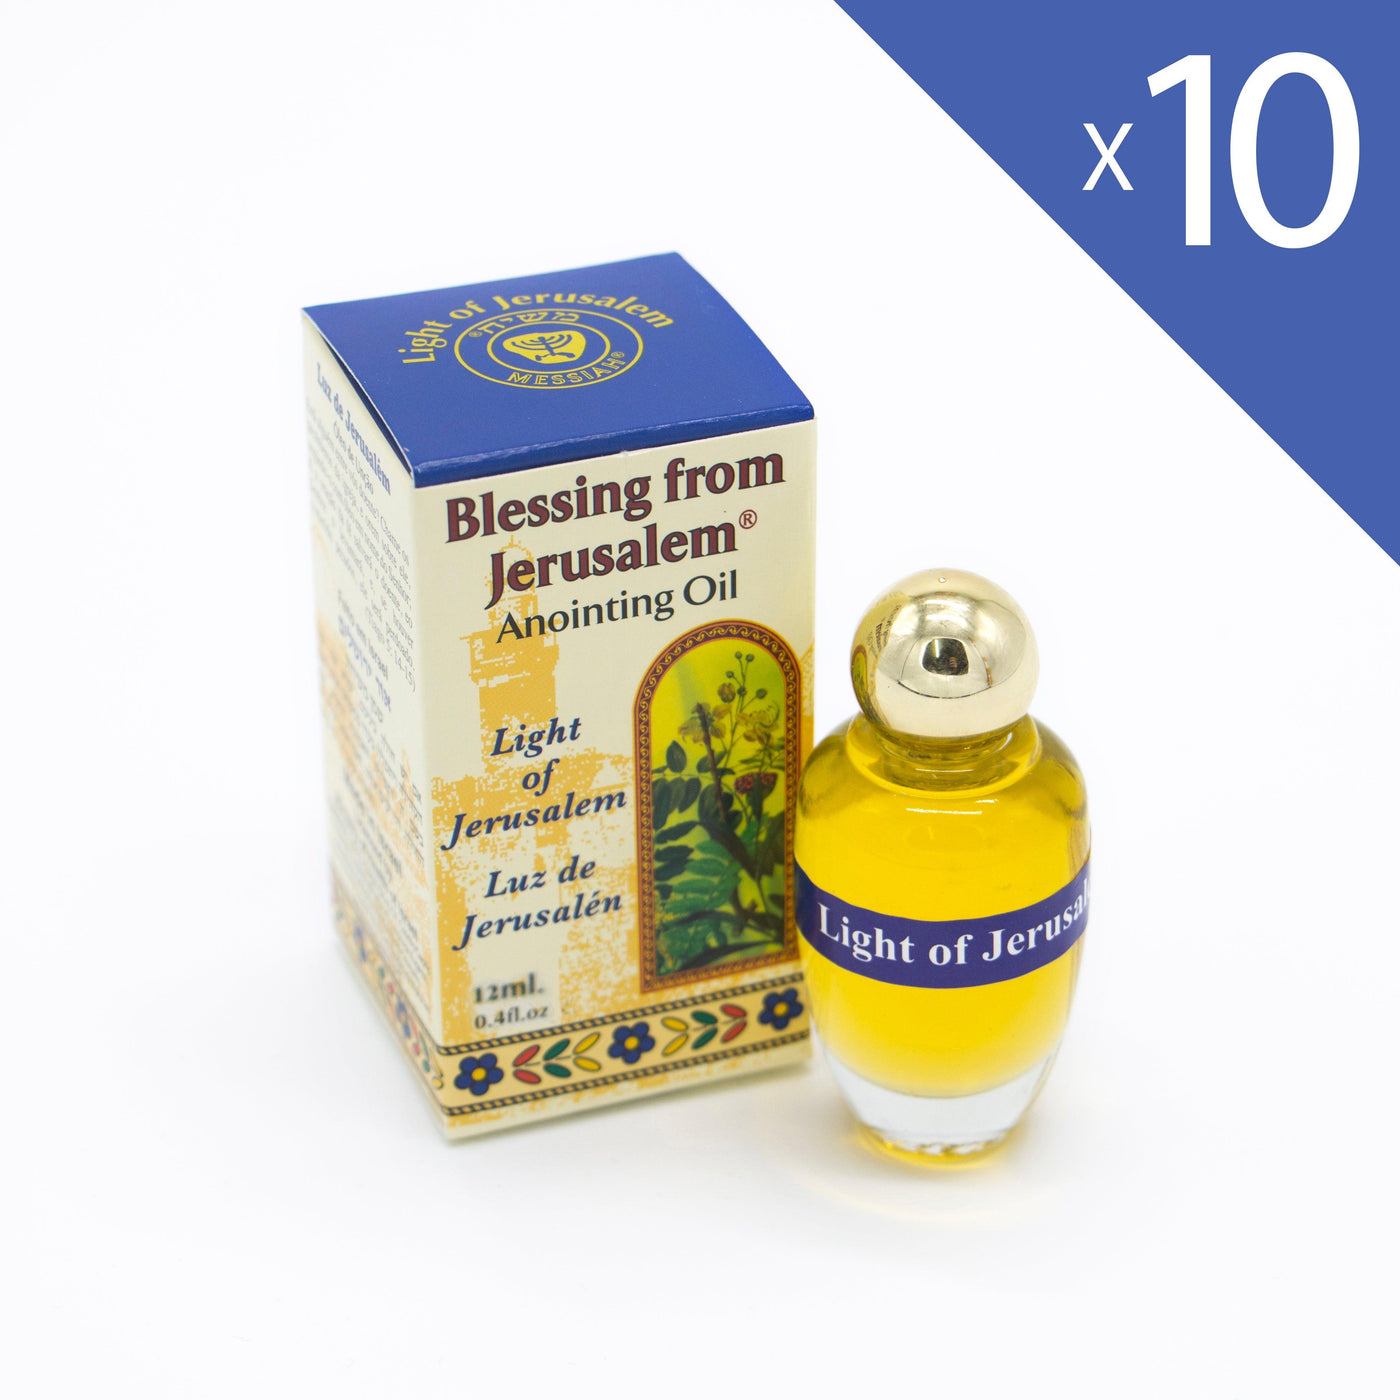 Lot of x 10 Anointing Oil Light of Jerusalem 12ml - 0.4oz From Holyland (10 bottles) - Spring Nahal